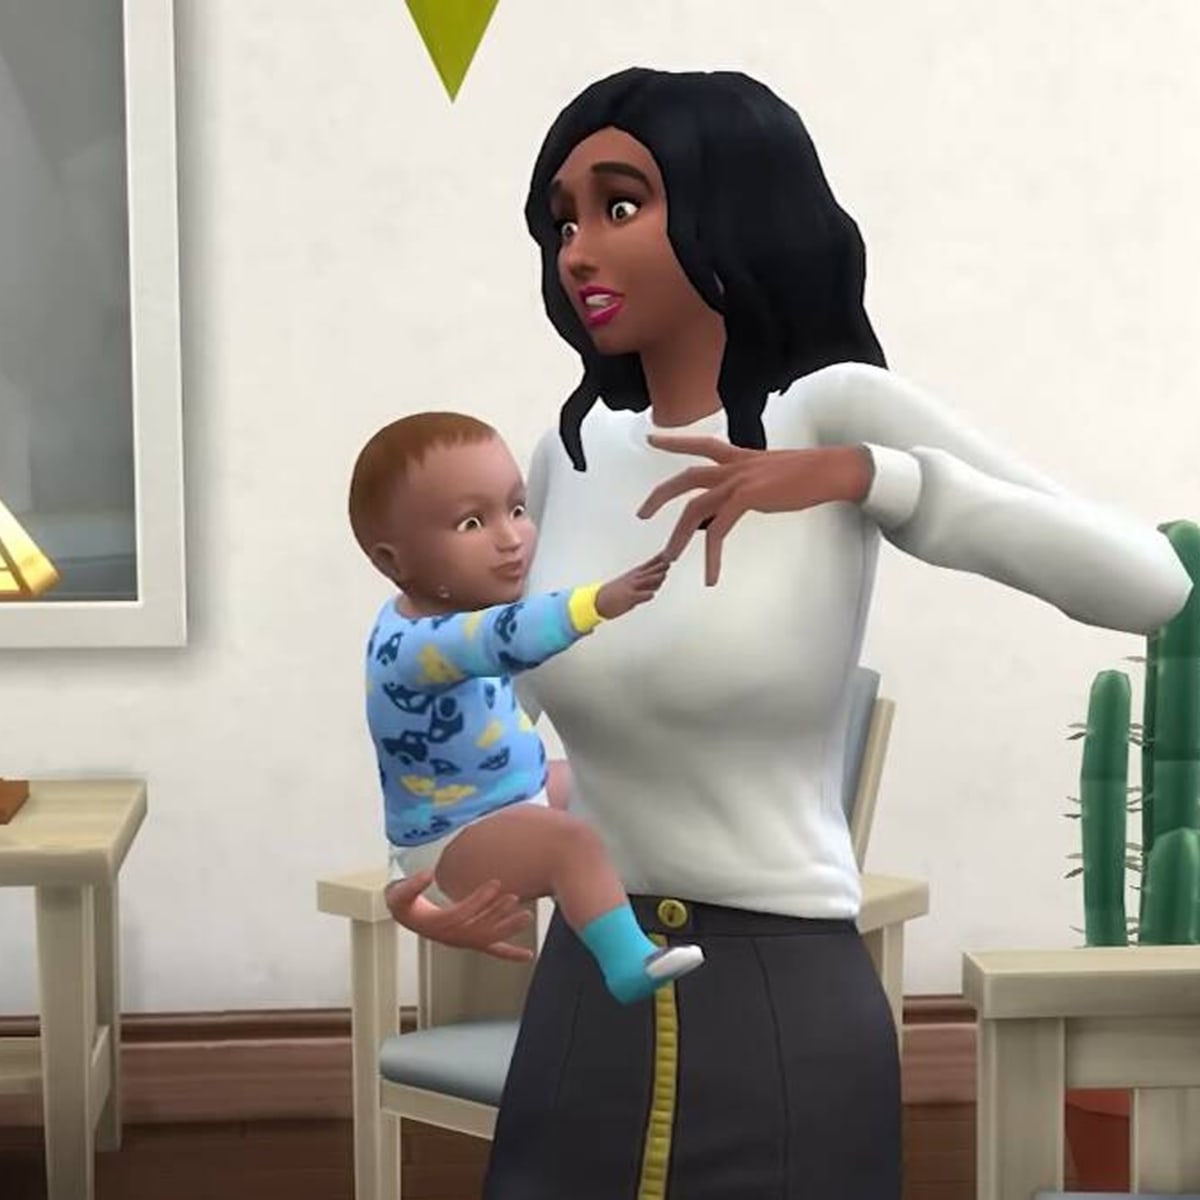 The Sims 4 Infants CAS: Customize Your Infants!